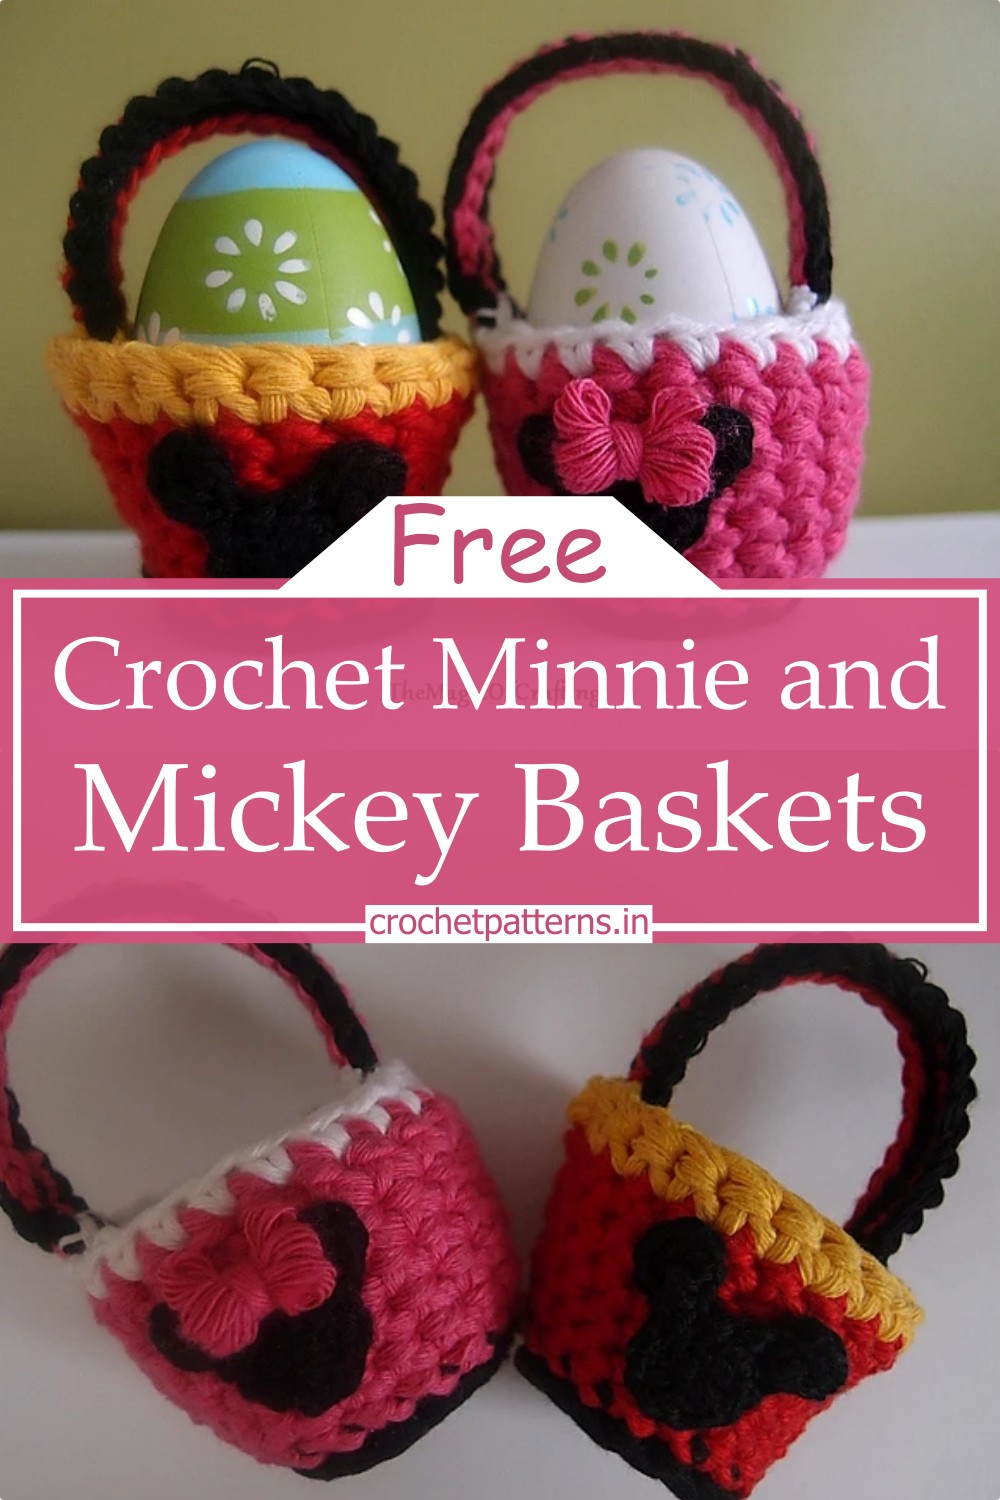 Minnie and Mickey Baskets